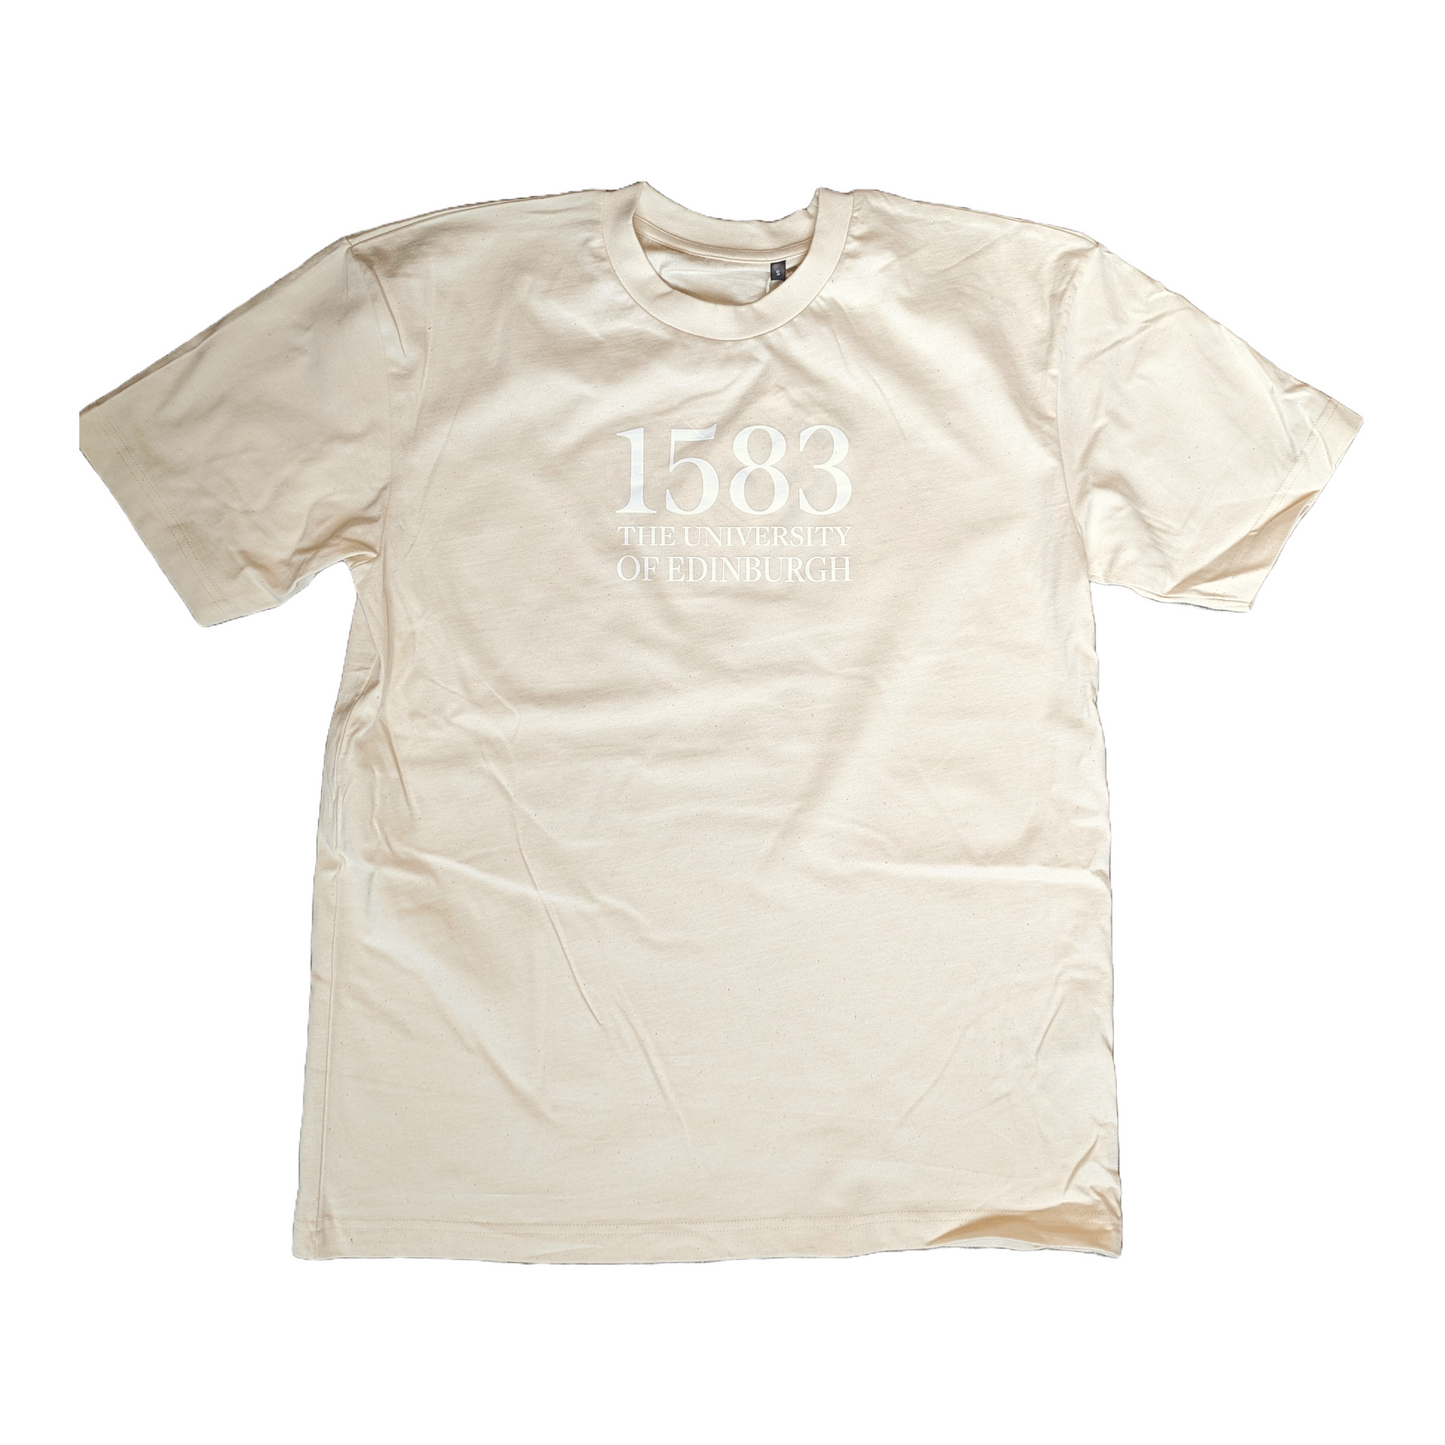 Oversized 1583 T-Shirt